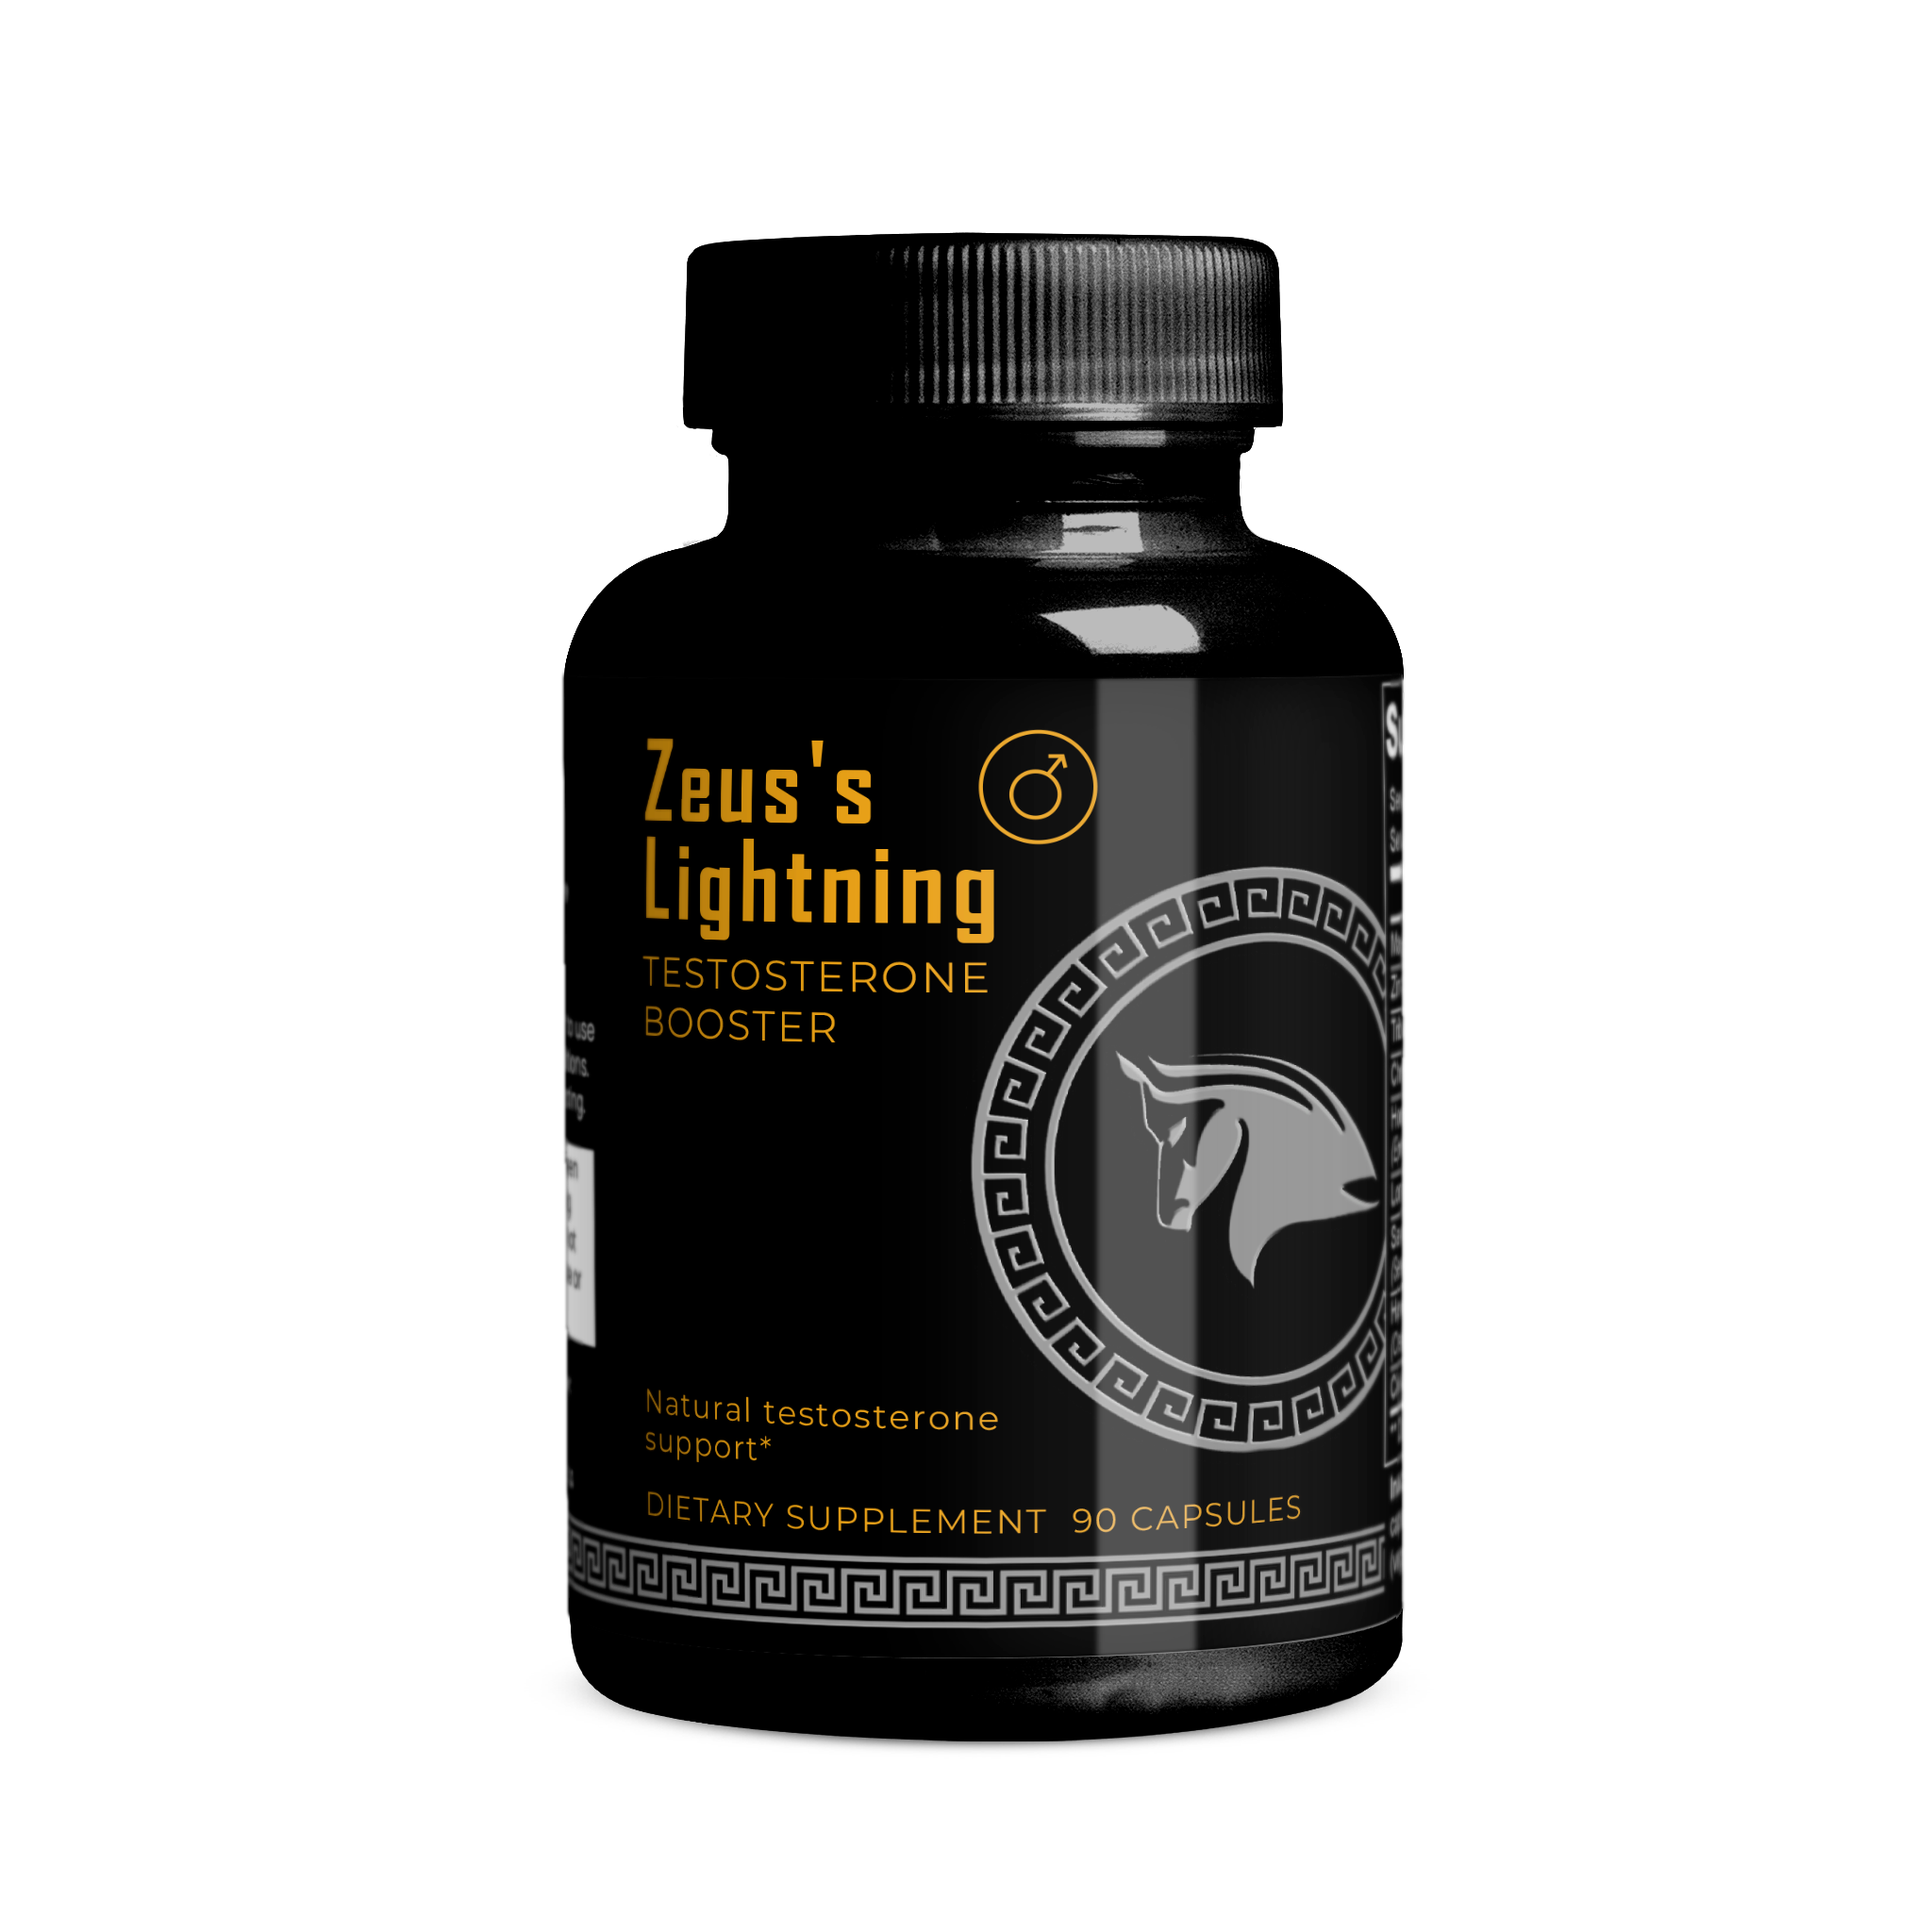 Zeus's Lightning (Natural Testosterone Booster) bottle